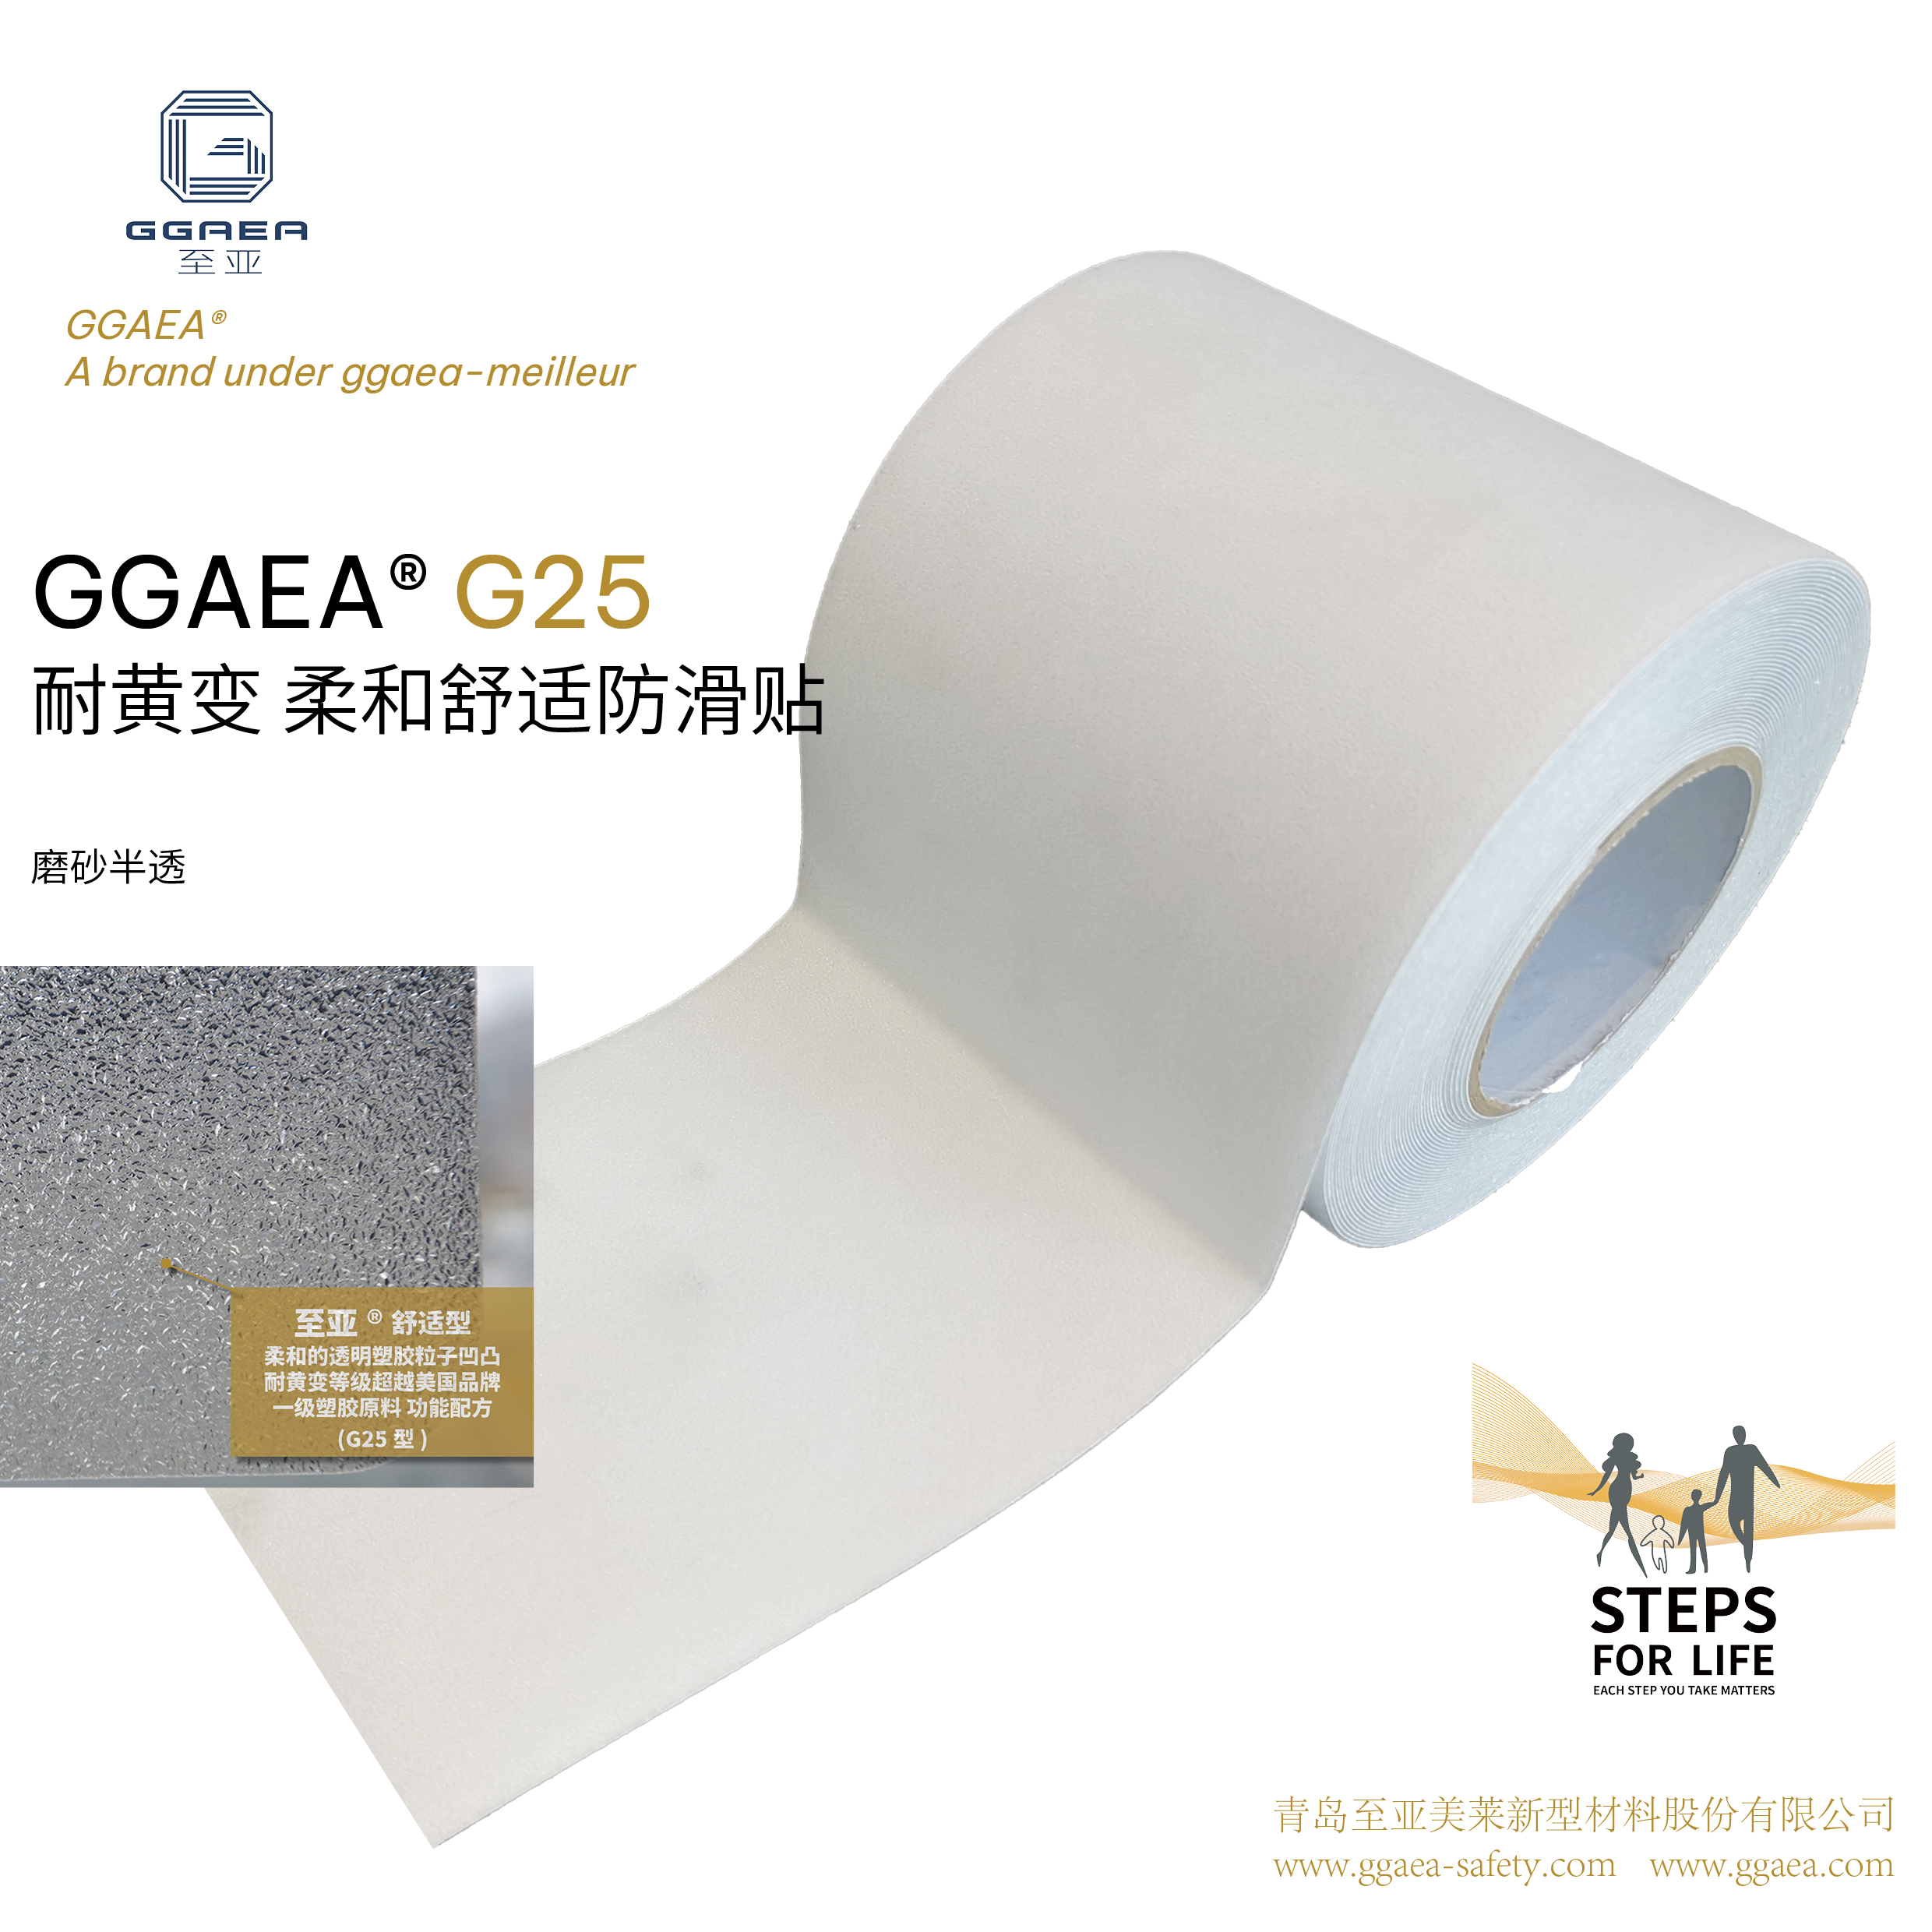 GGAEA™ G25 Comfortable Anti-Slip Tape and Threads